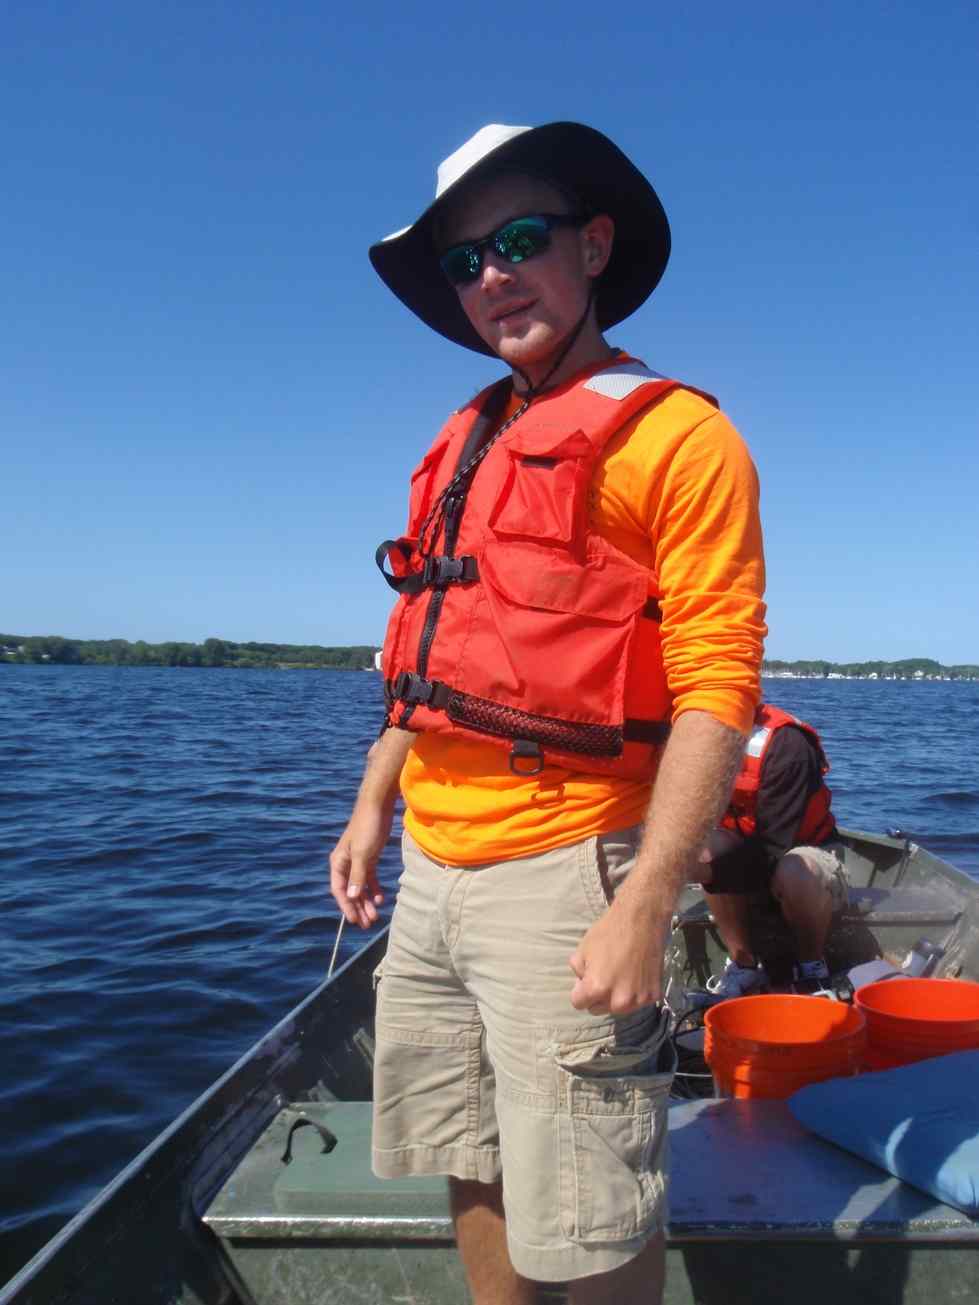 Nick Weber on a jon boat on Muskegon Lake